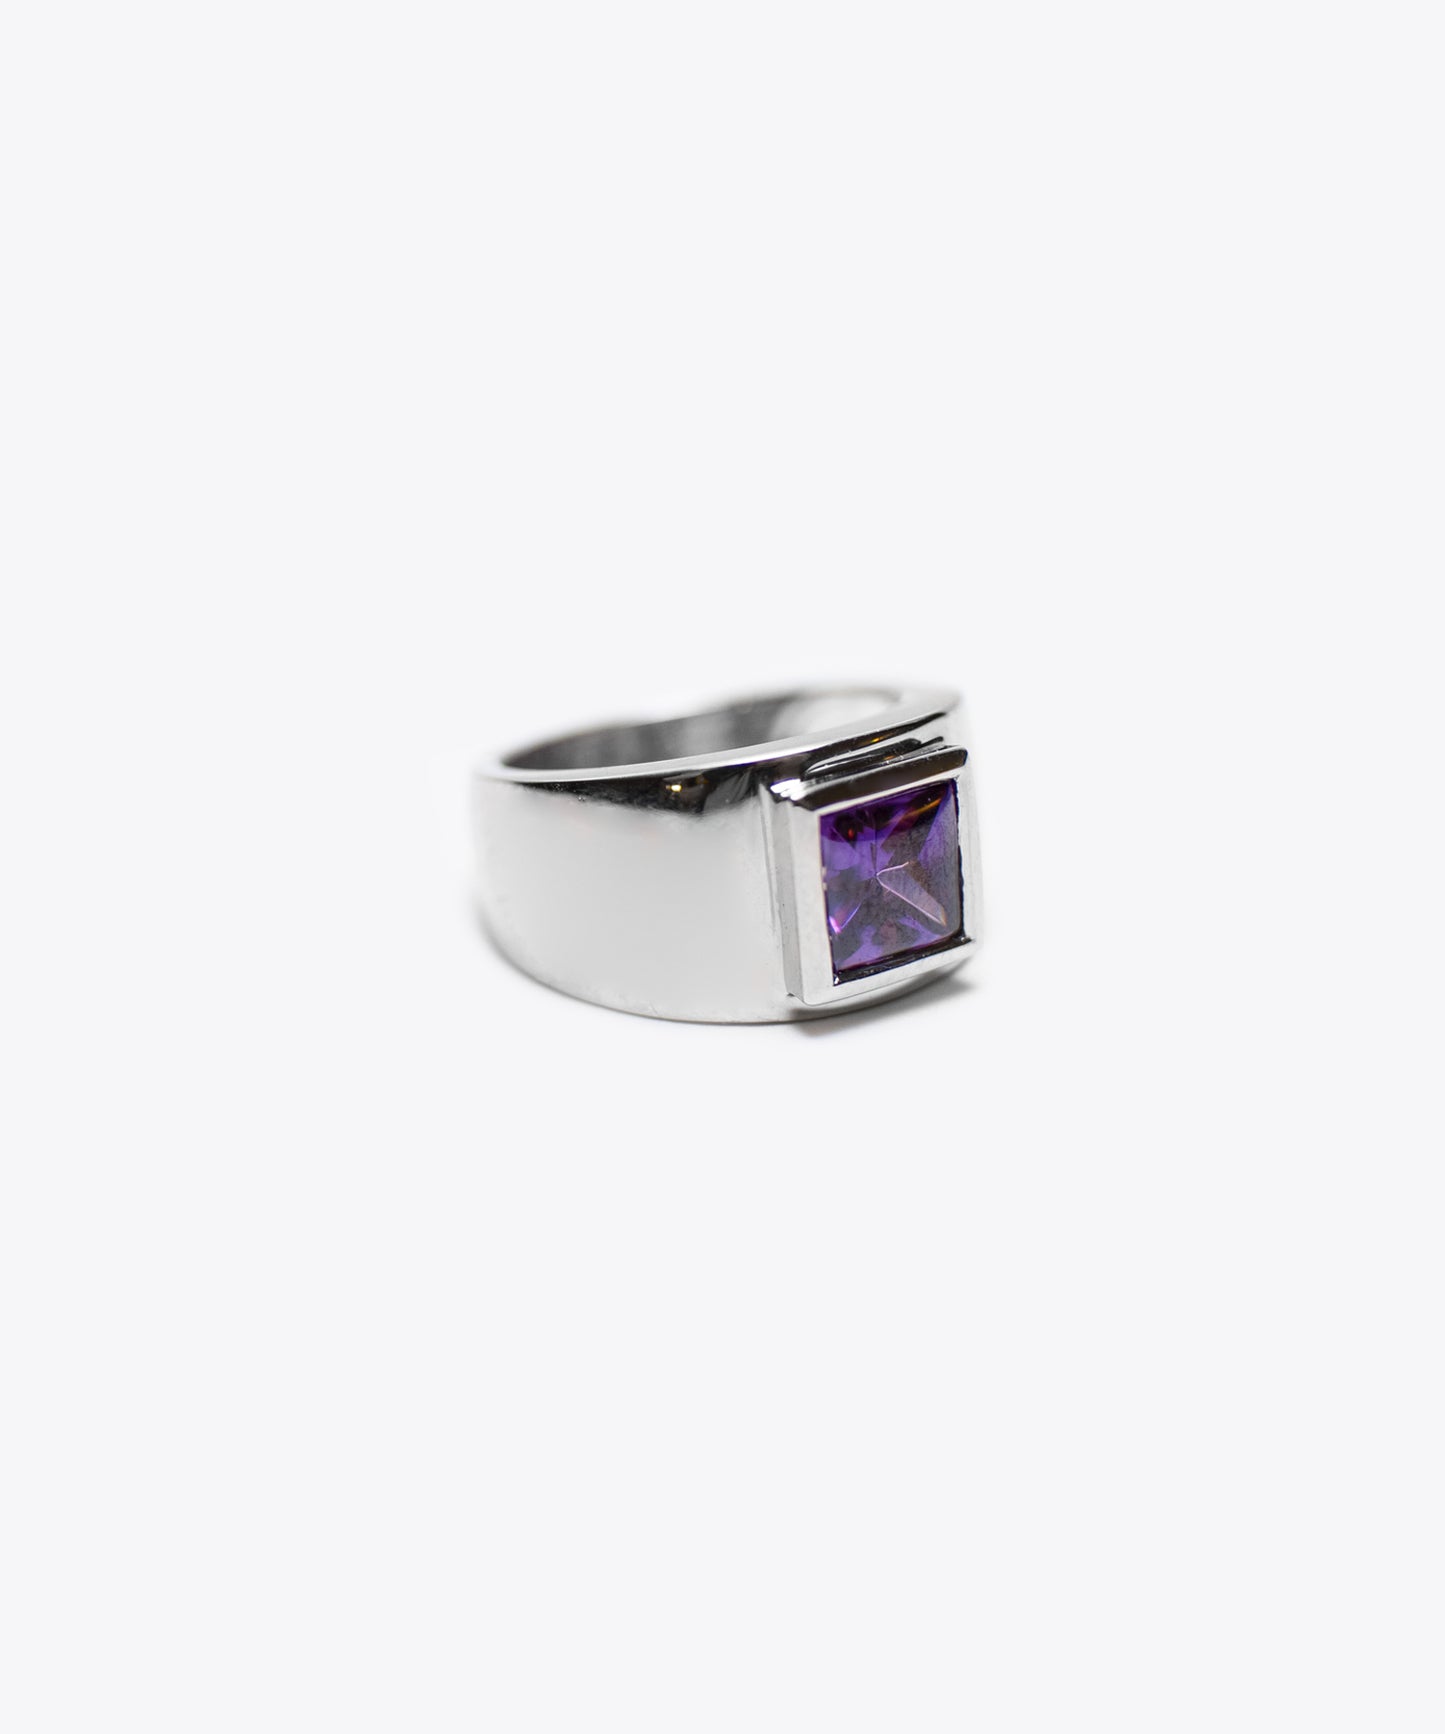 The Midan Violet Ring